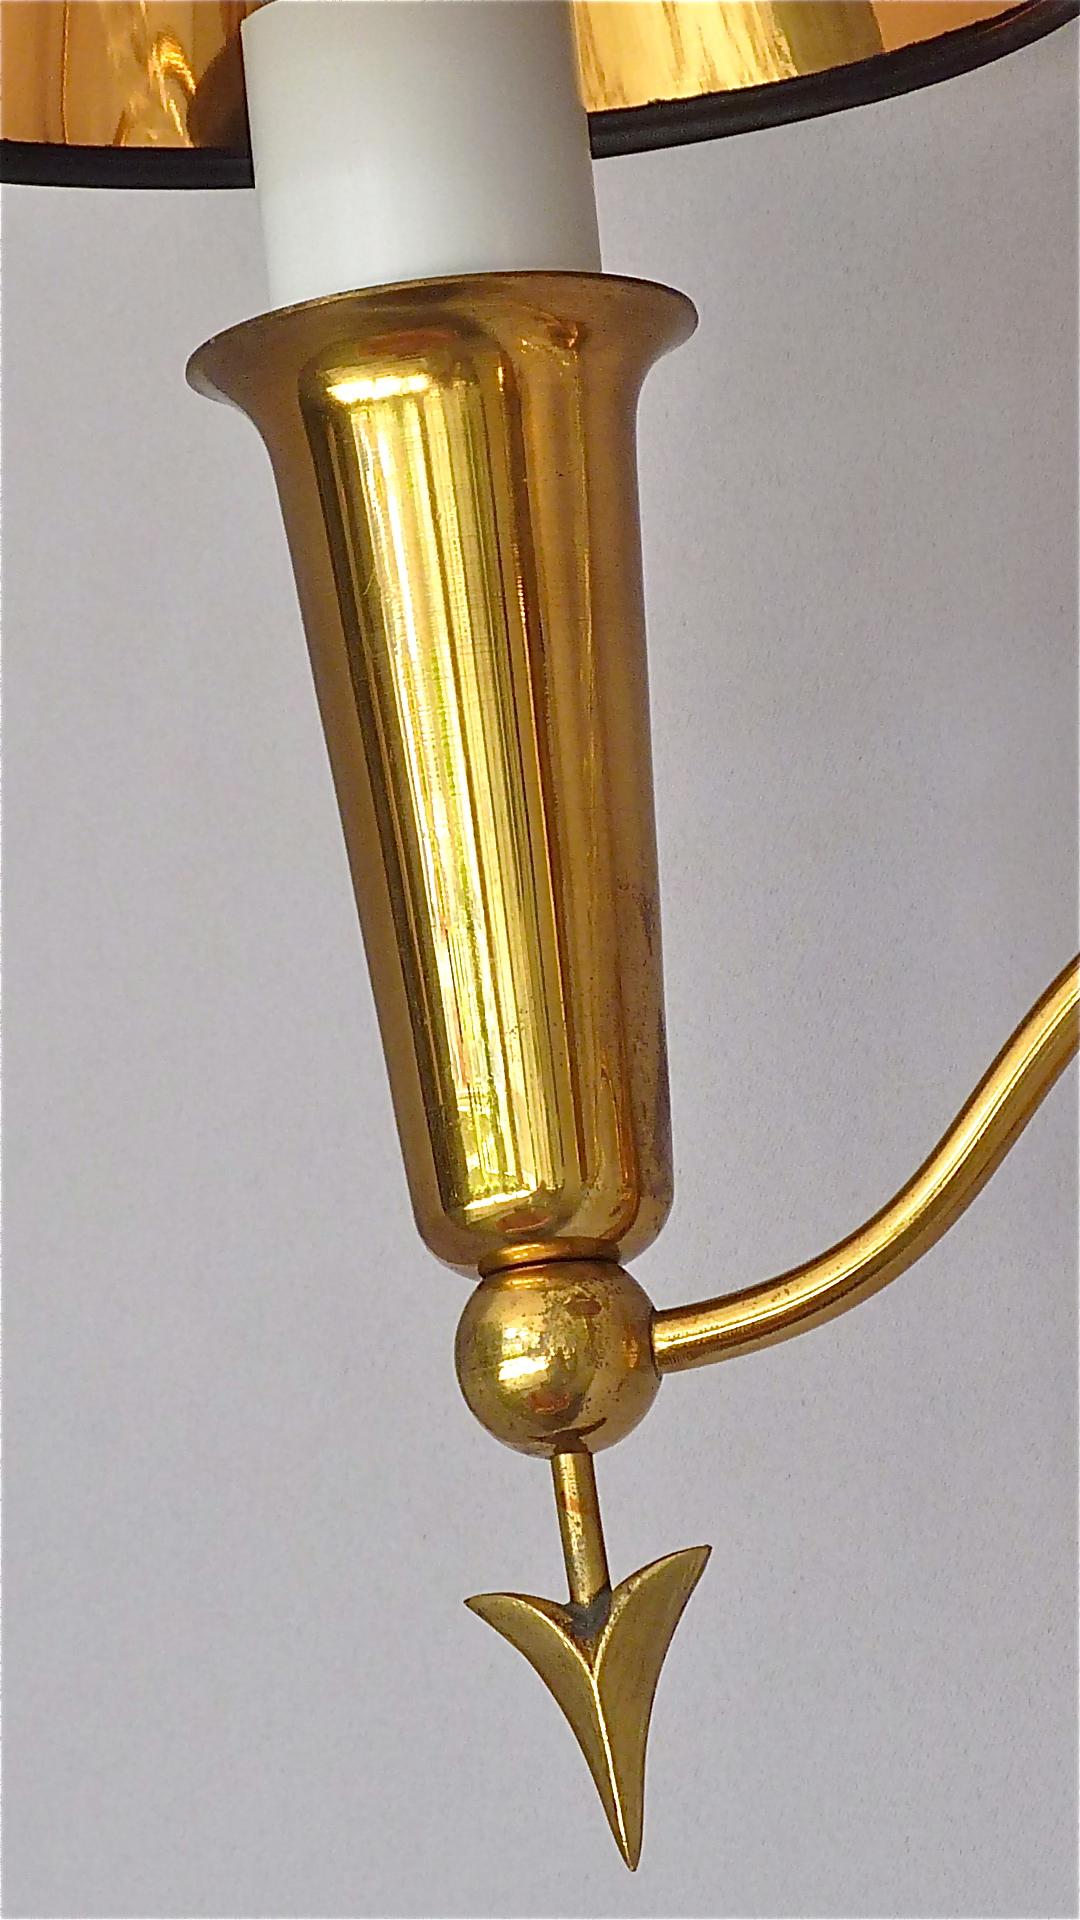 Pair of Maison Arlus Midcentury Sconces Jansen Arrow Brass Lamp, Gio Ponti Style 9